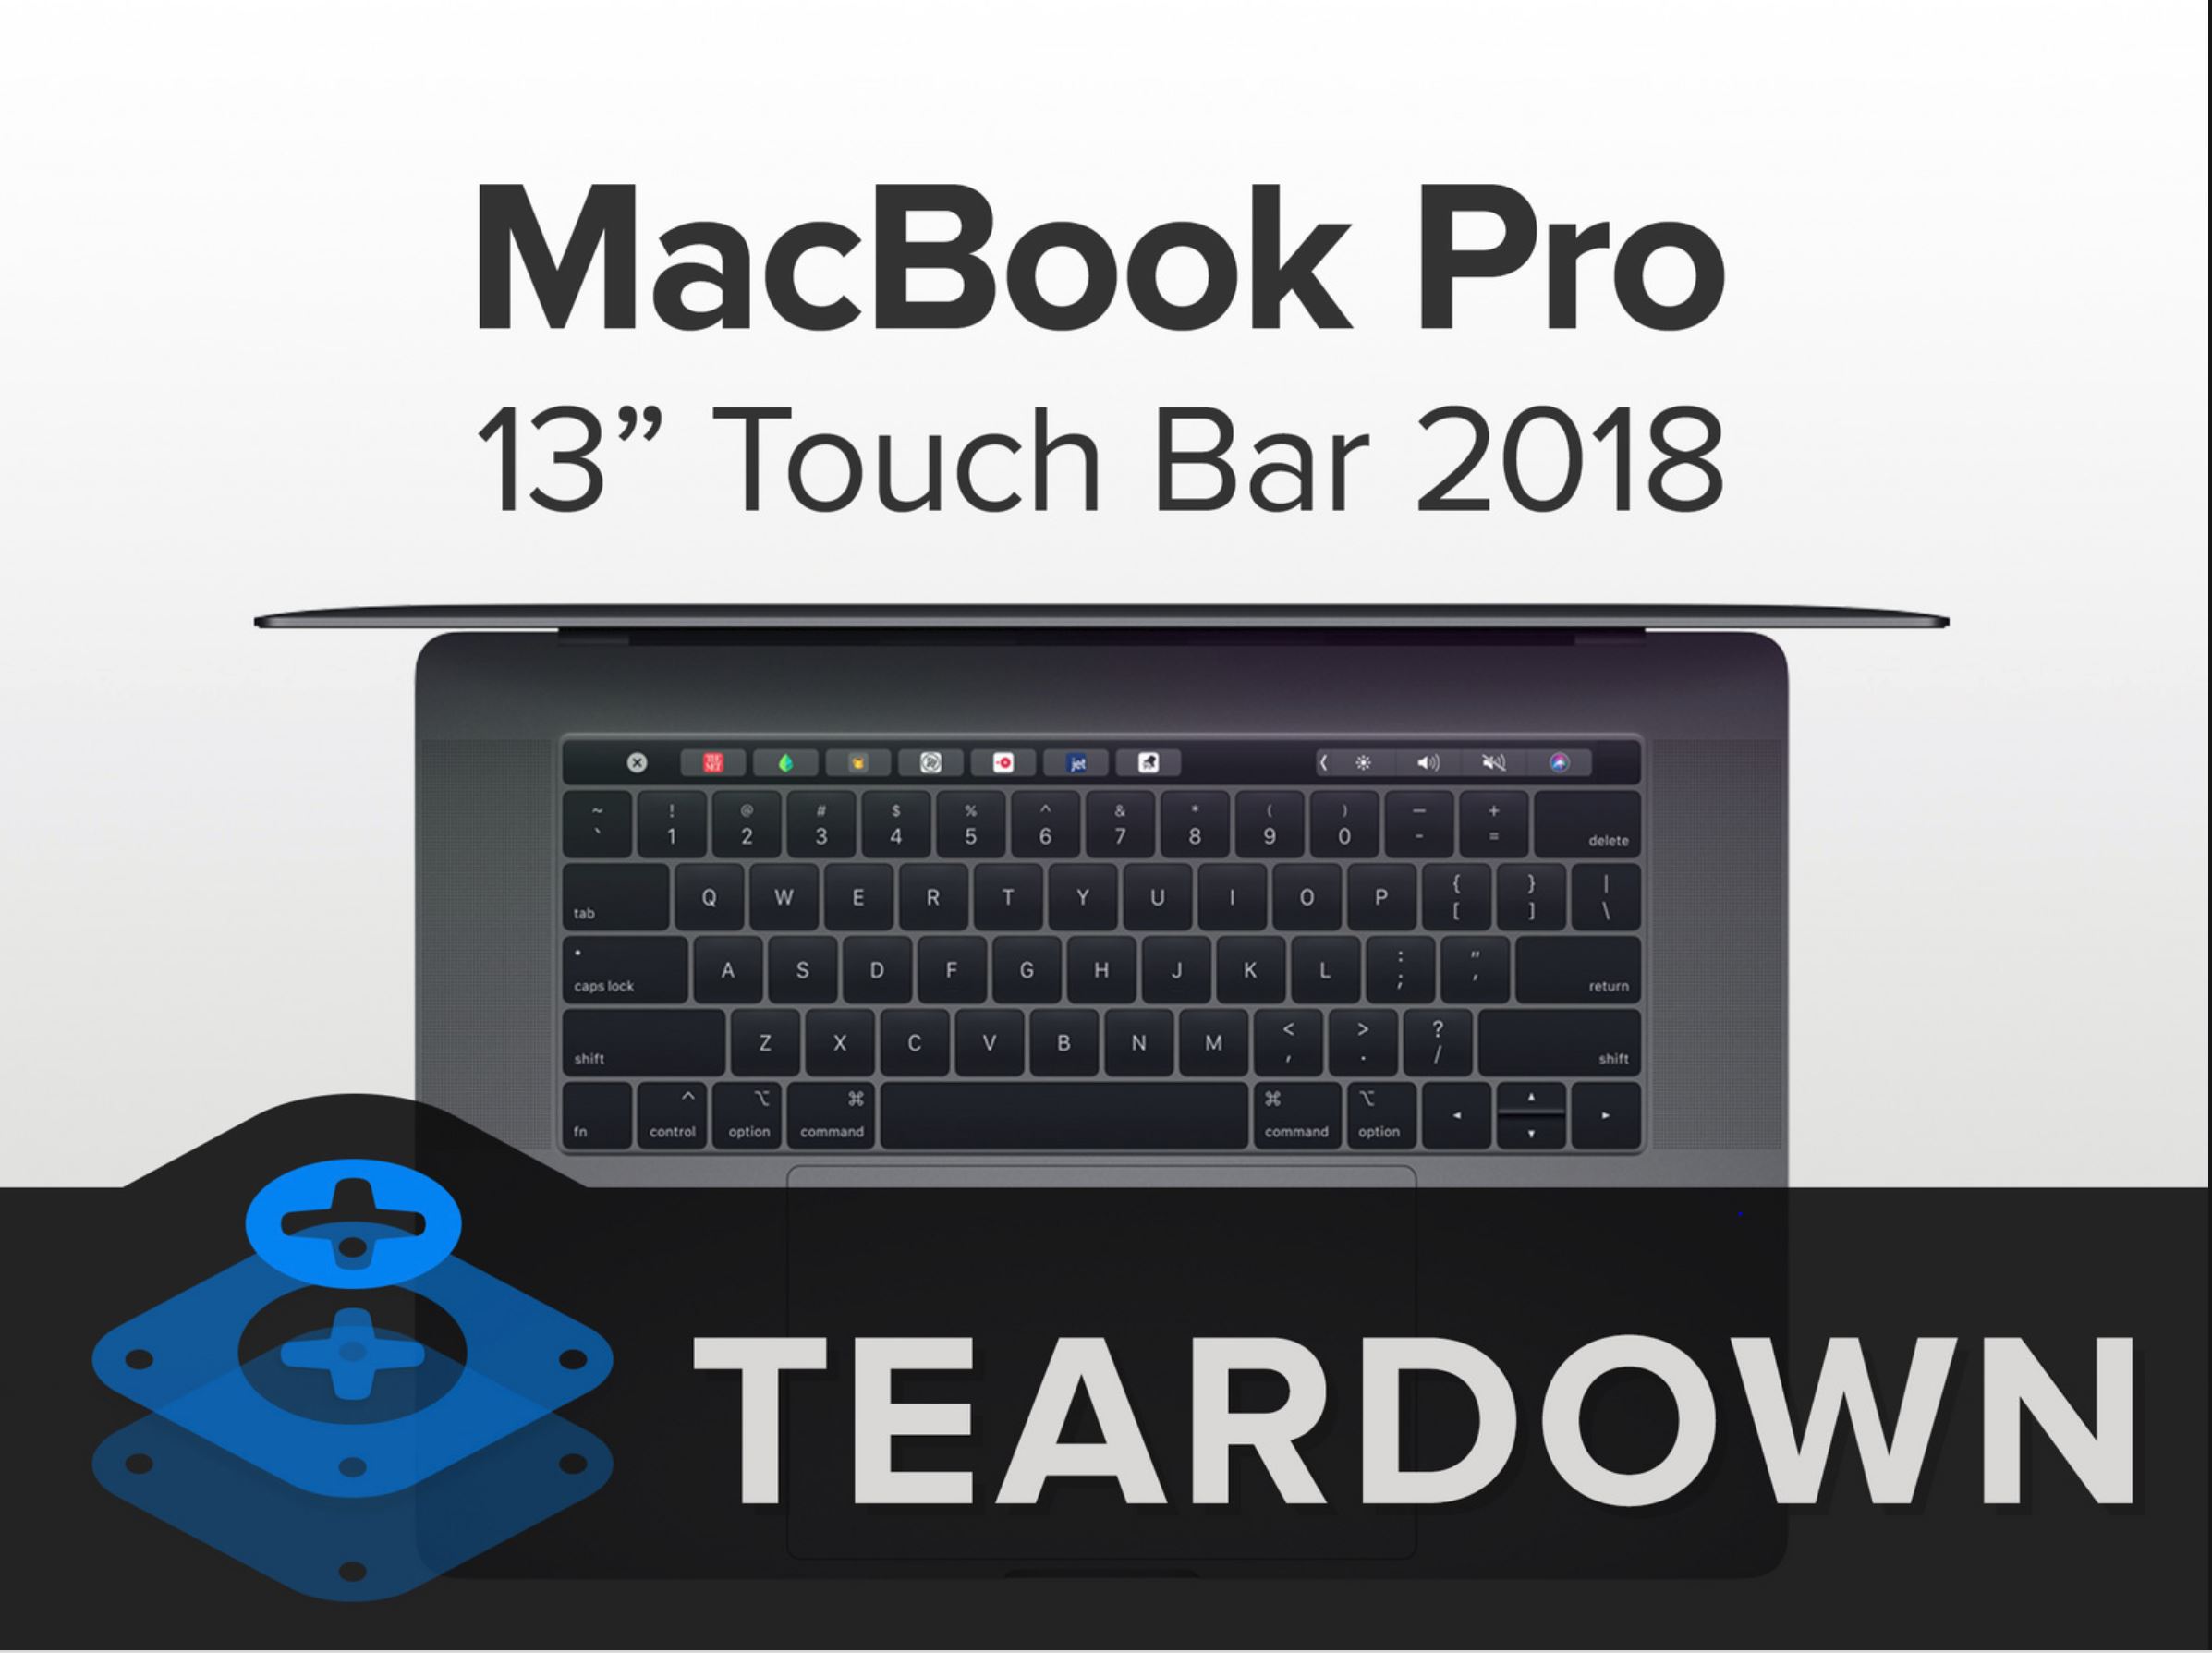 2018 Macbook Pro teardown